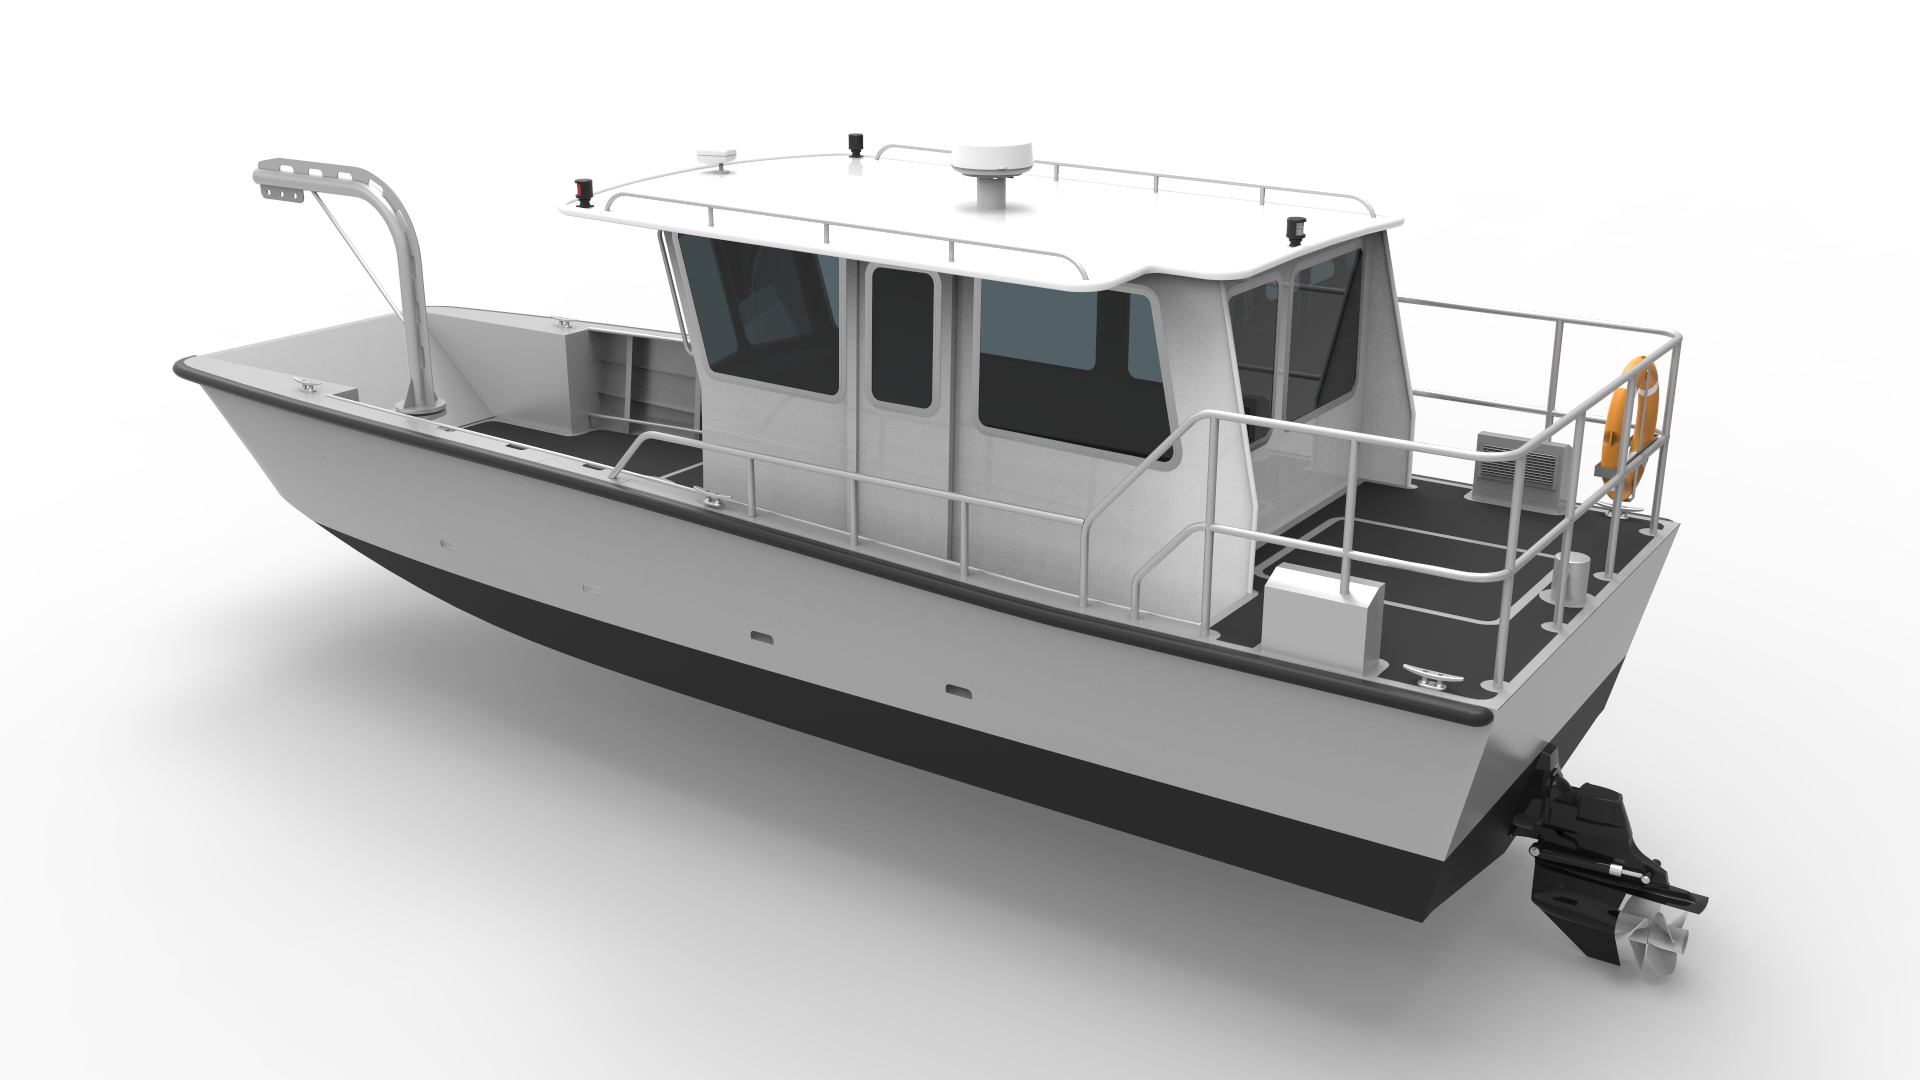 Metal Boat Kits | Premium CNC boat kits in Aluminum Alloy ...